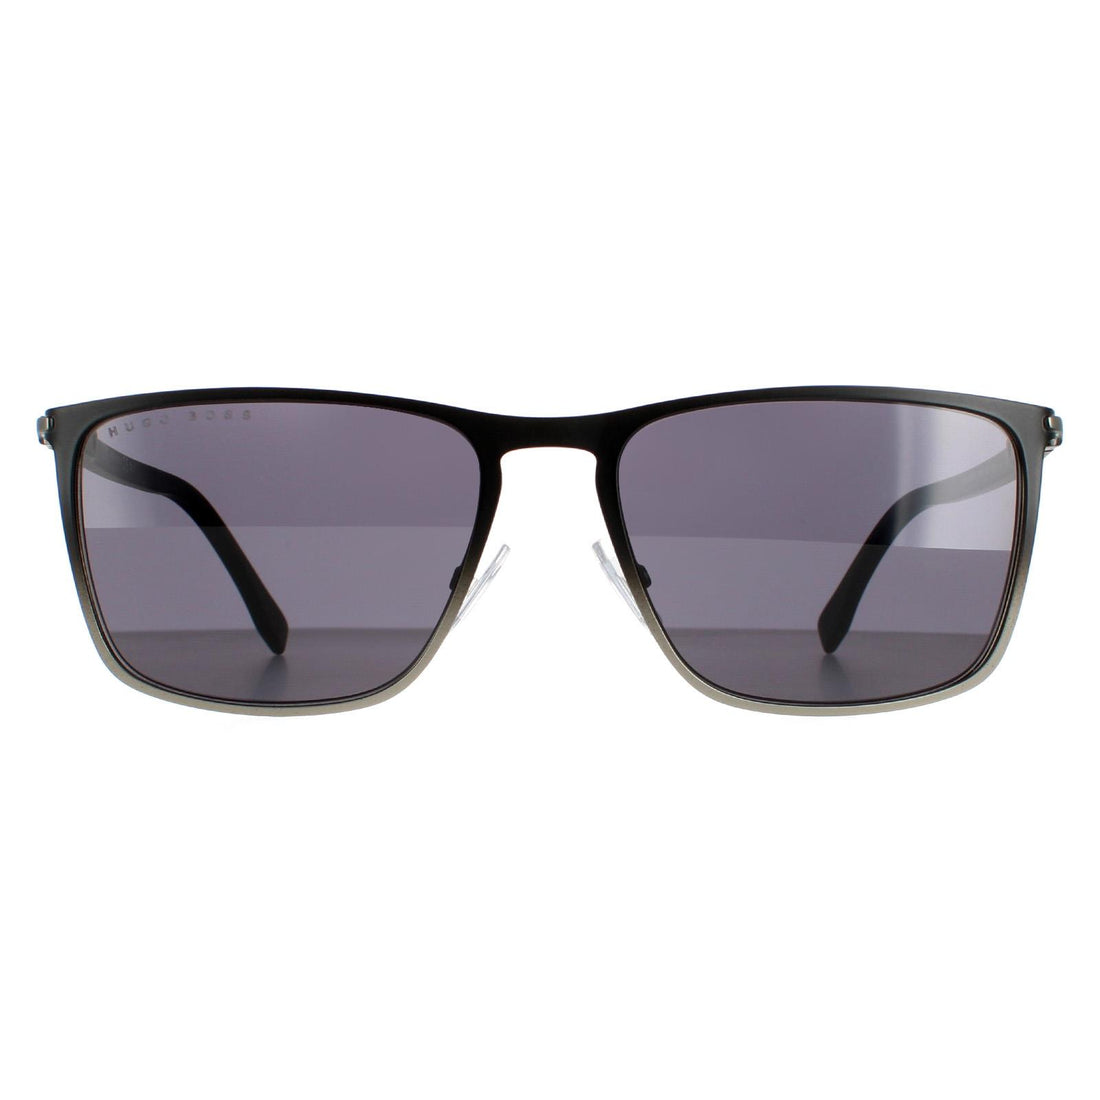 Hugo Boss 1004/S Sunglasses Black Ruthenium and Dark Grey Grey